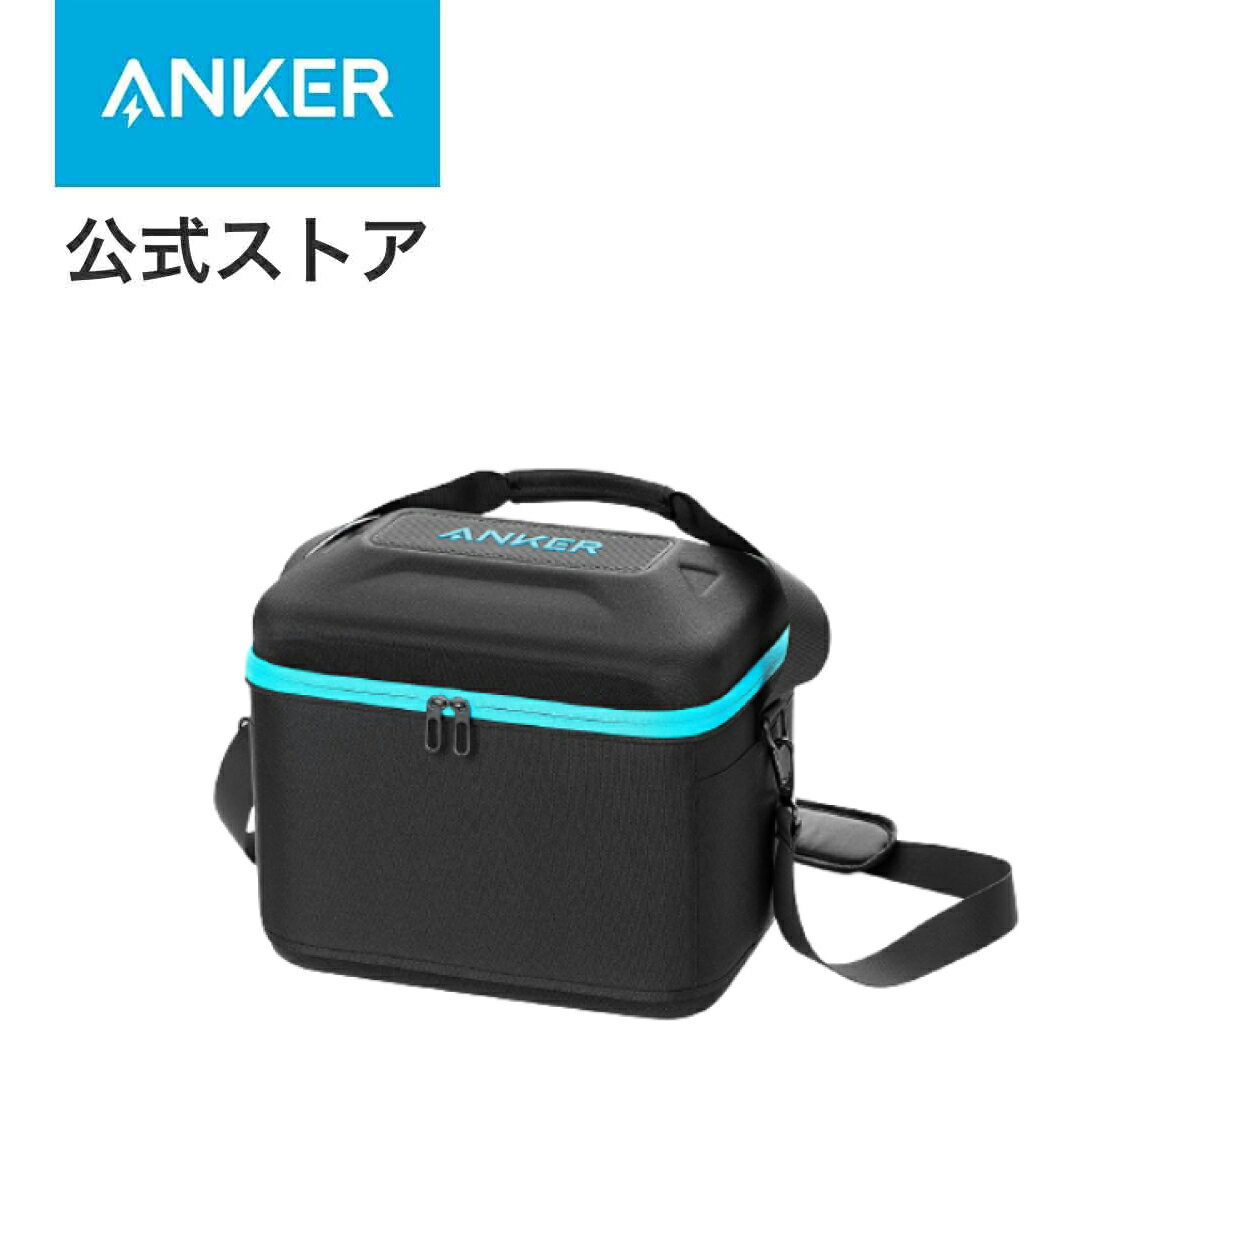 Anker Carrying Case Bag (S Size) 収納バッグ キャリーバック Anker 521 / 522対応